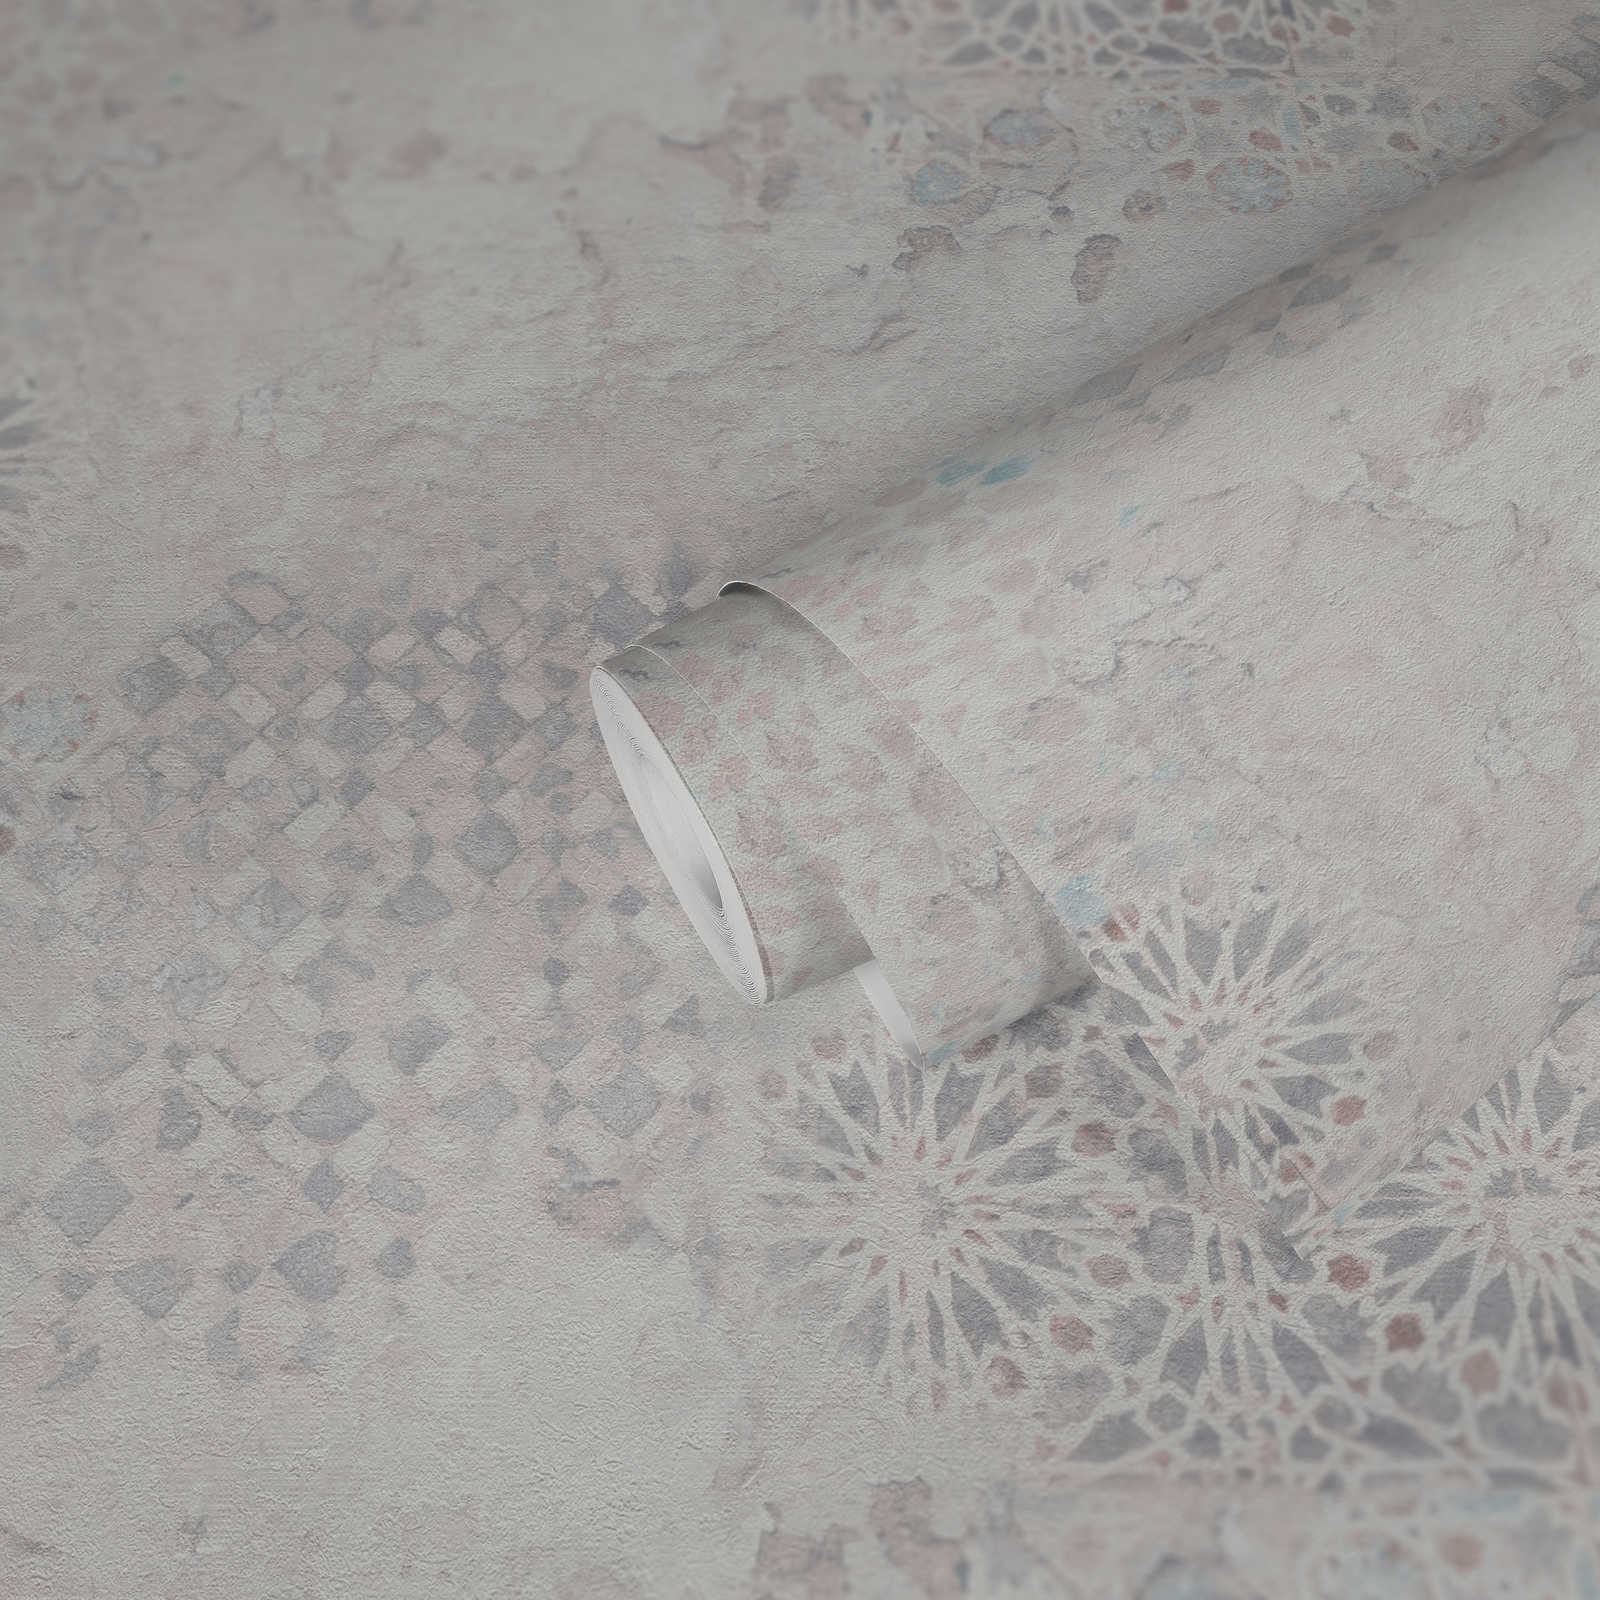             Mustertapete mit Mosaik Design im Vintage Stil – Grau, Grün, Lila
        